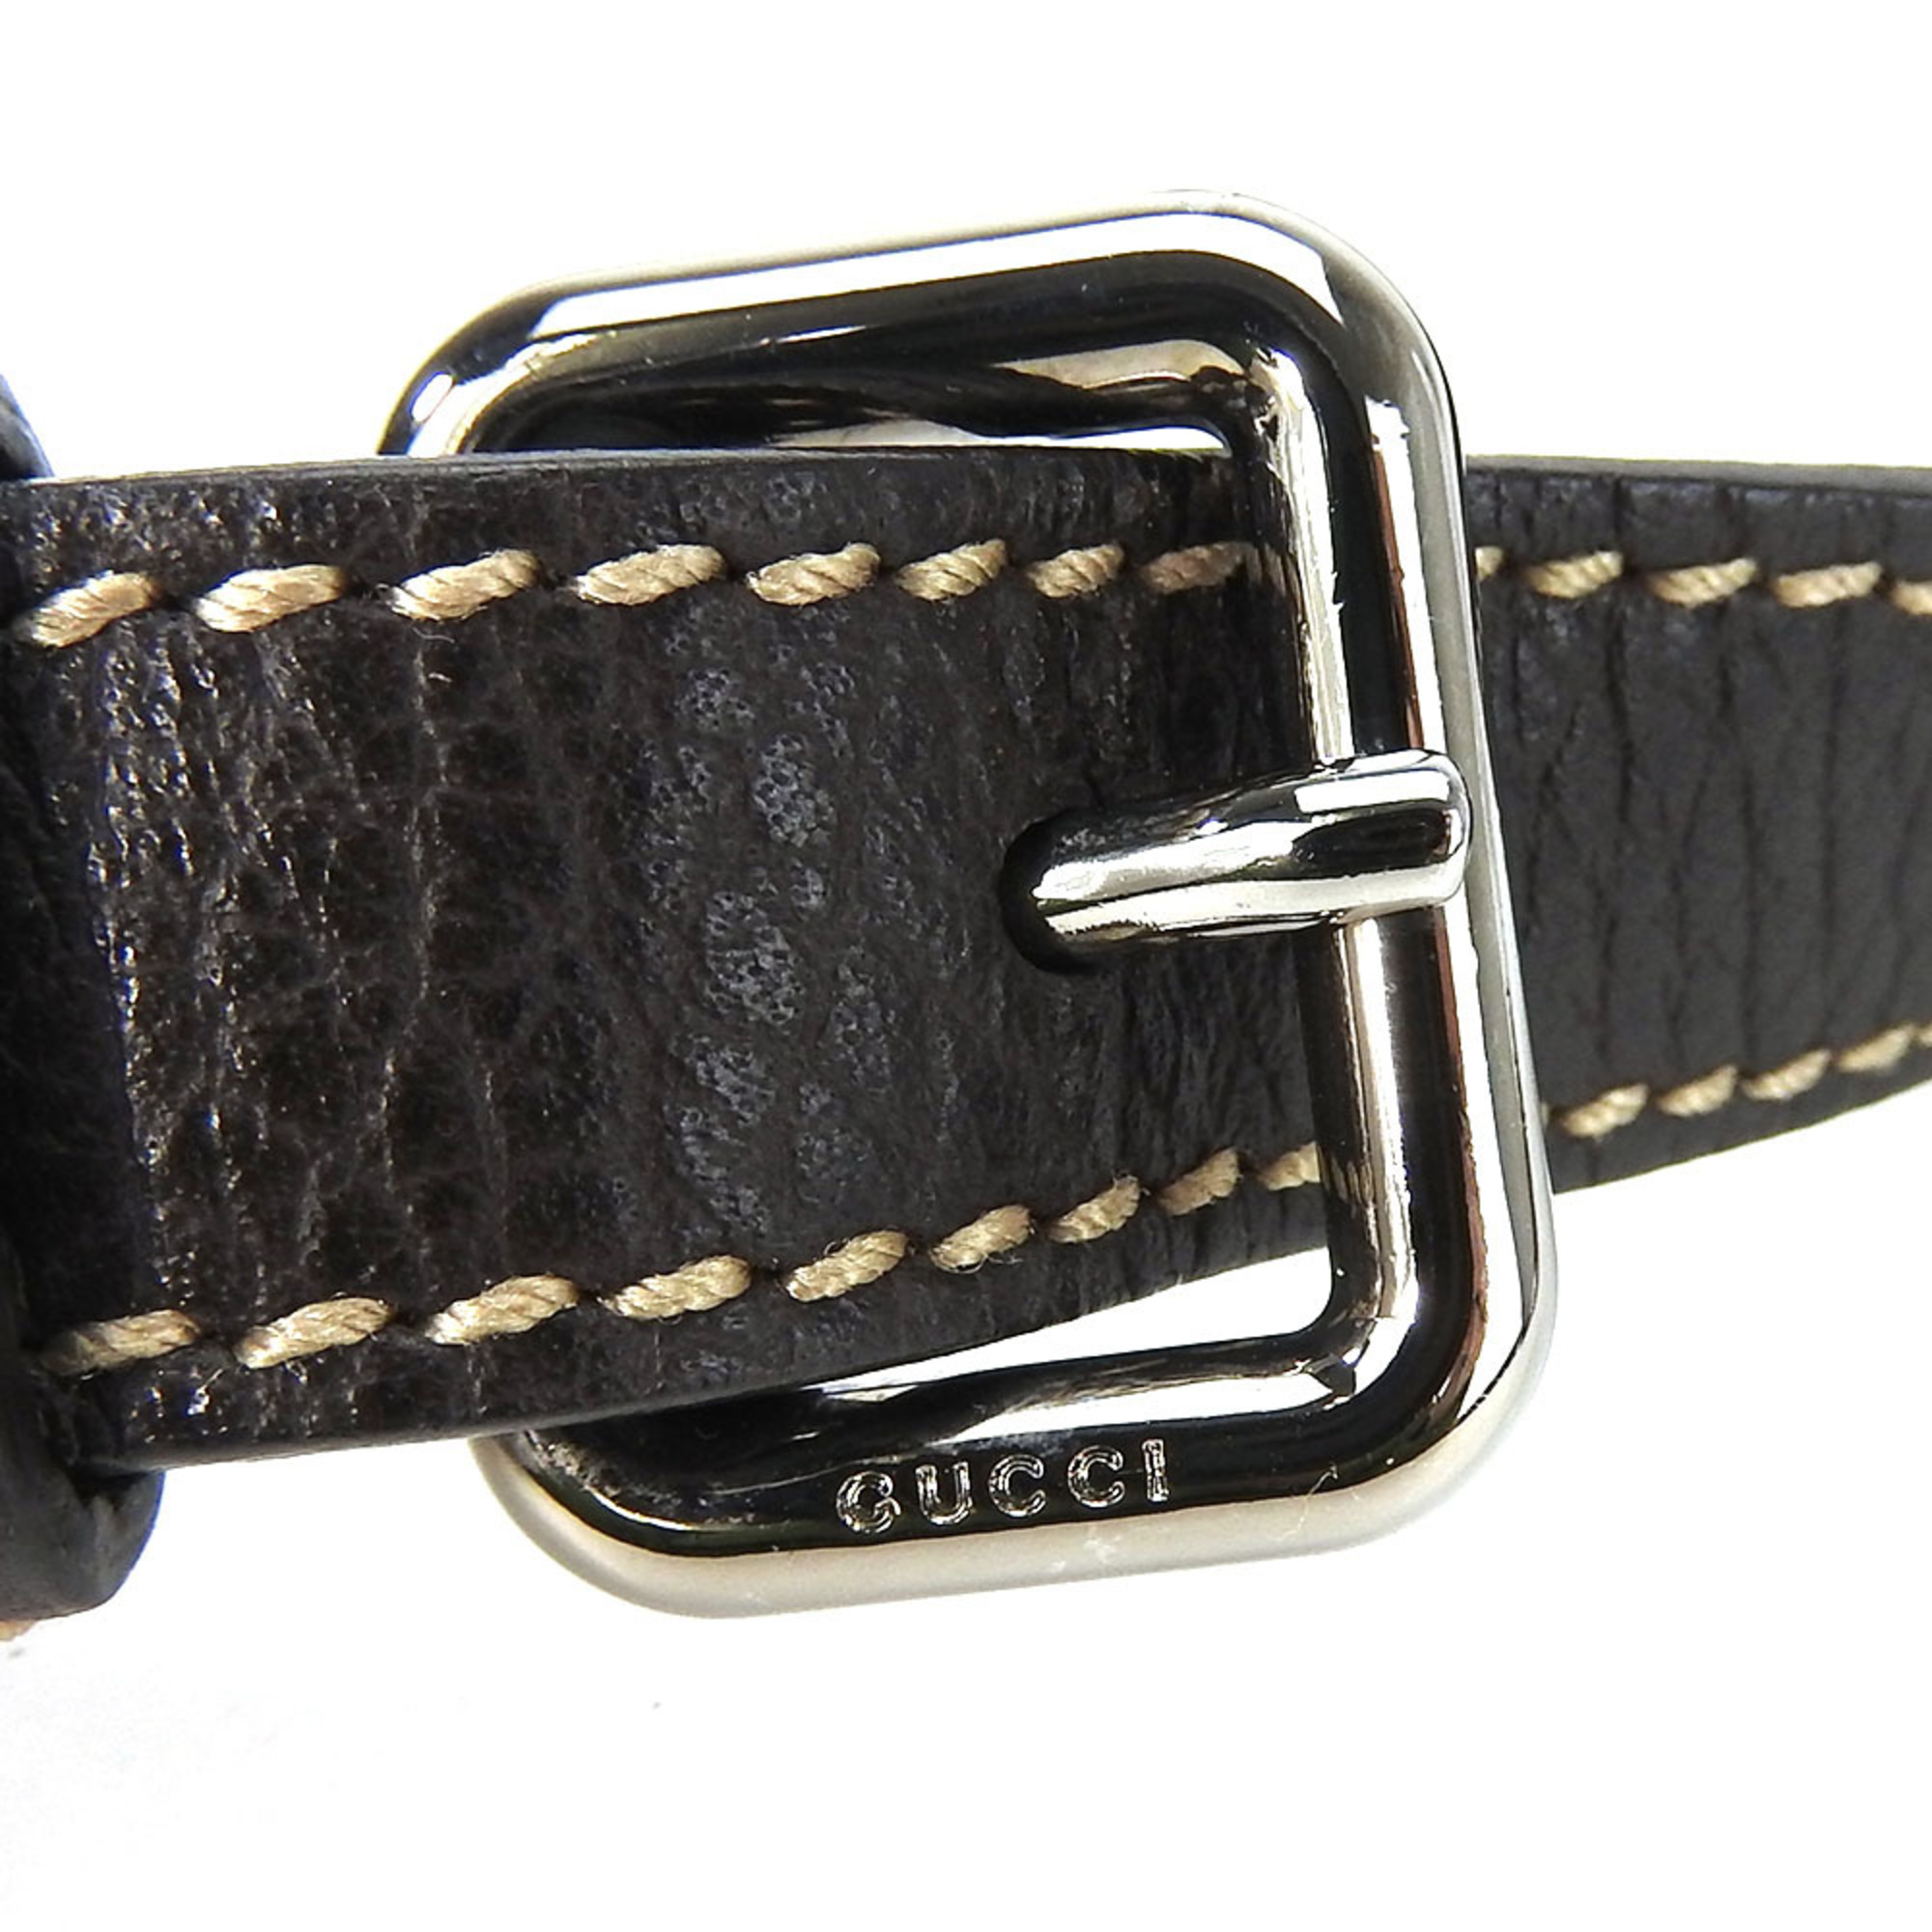 Gucci Shoulder Strap Leather Brown 100.5-110.5cm Adjustable GUCCI